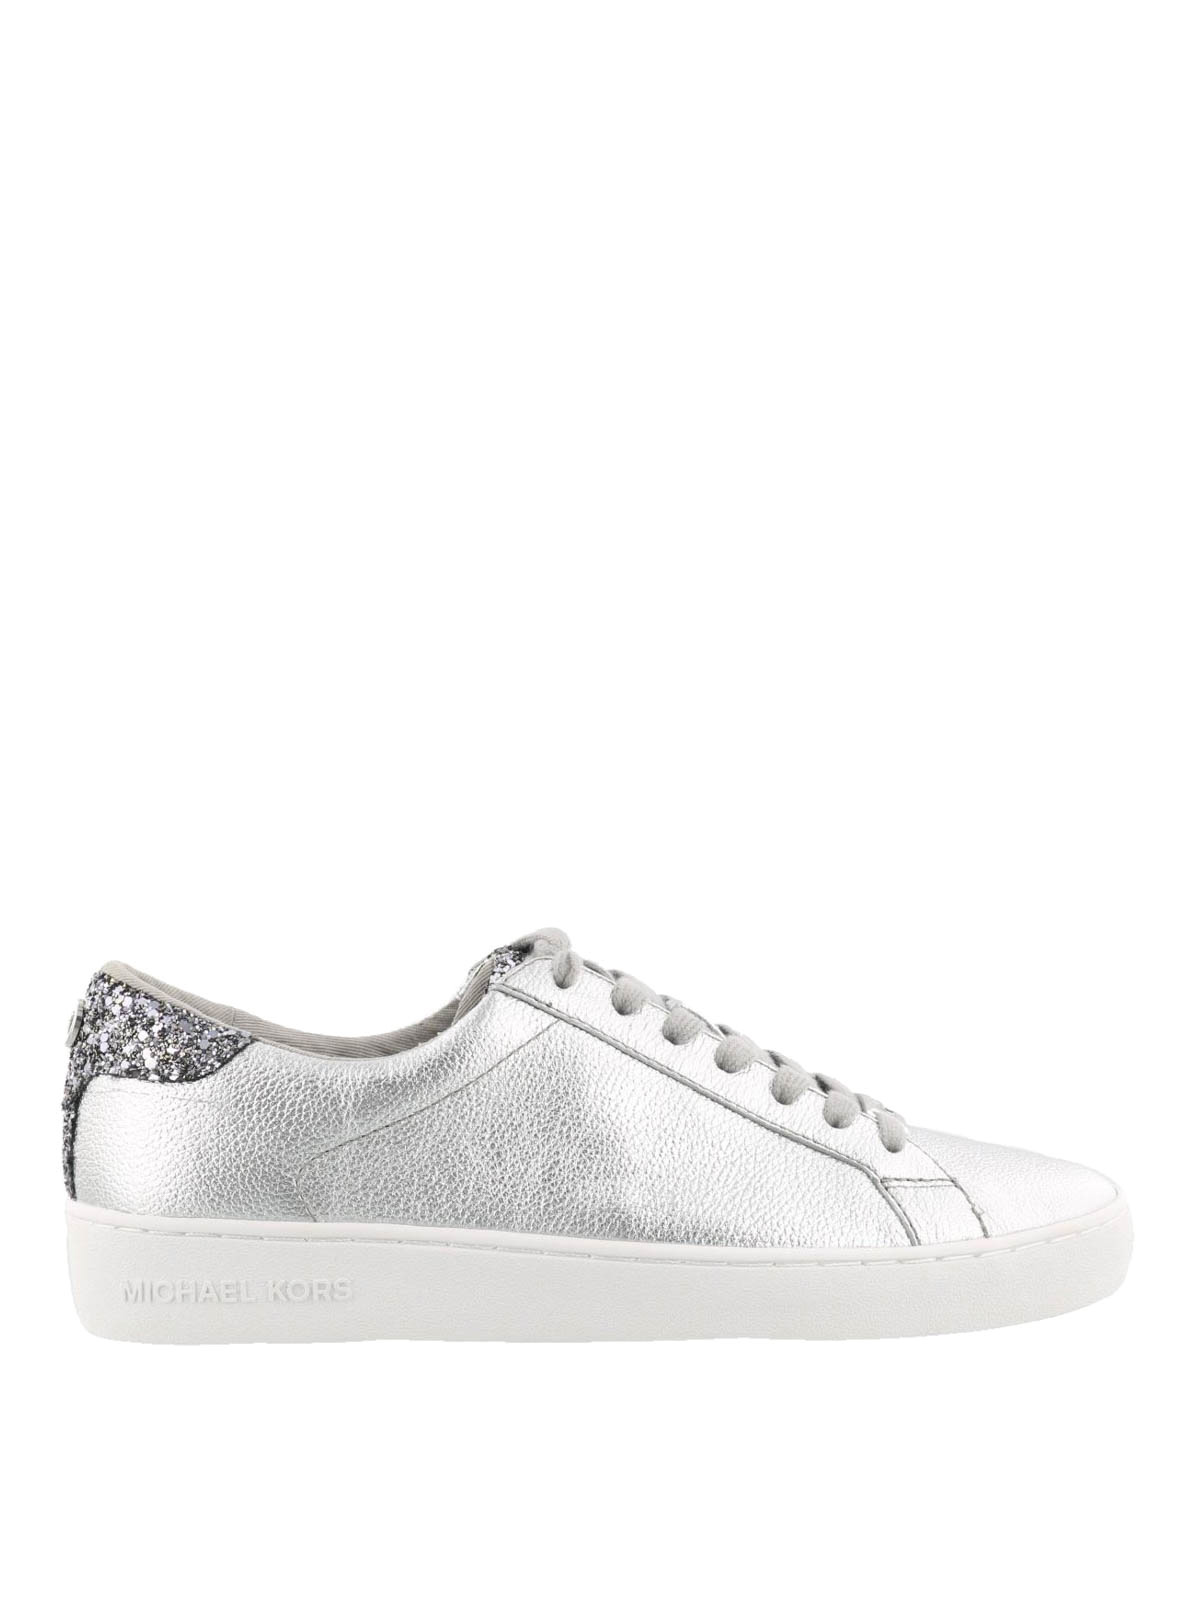 MK Michael Kors Sara Flex Kitten Silver Glitter Pumps Shoes New Box Womens  7  eBay